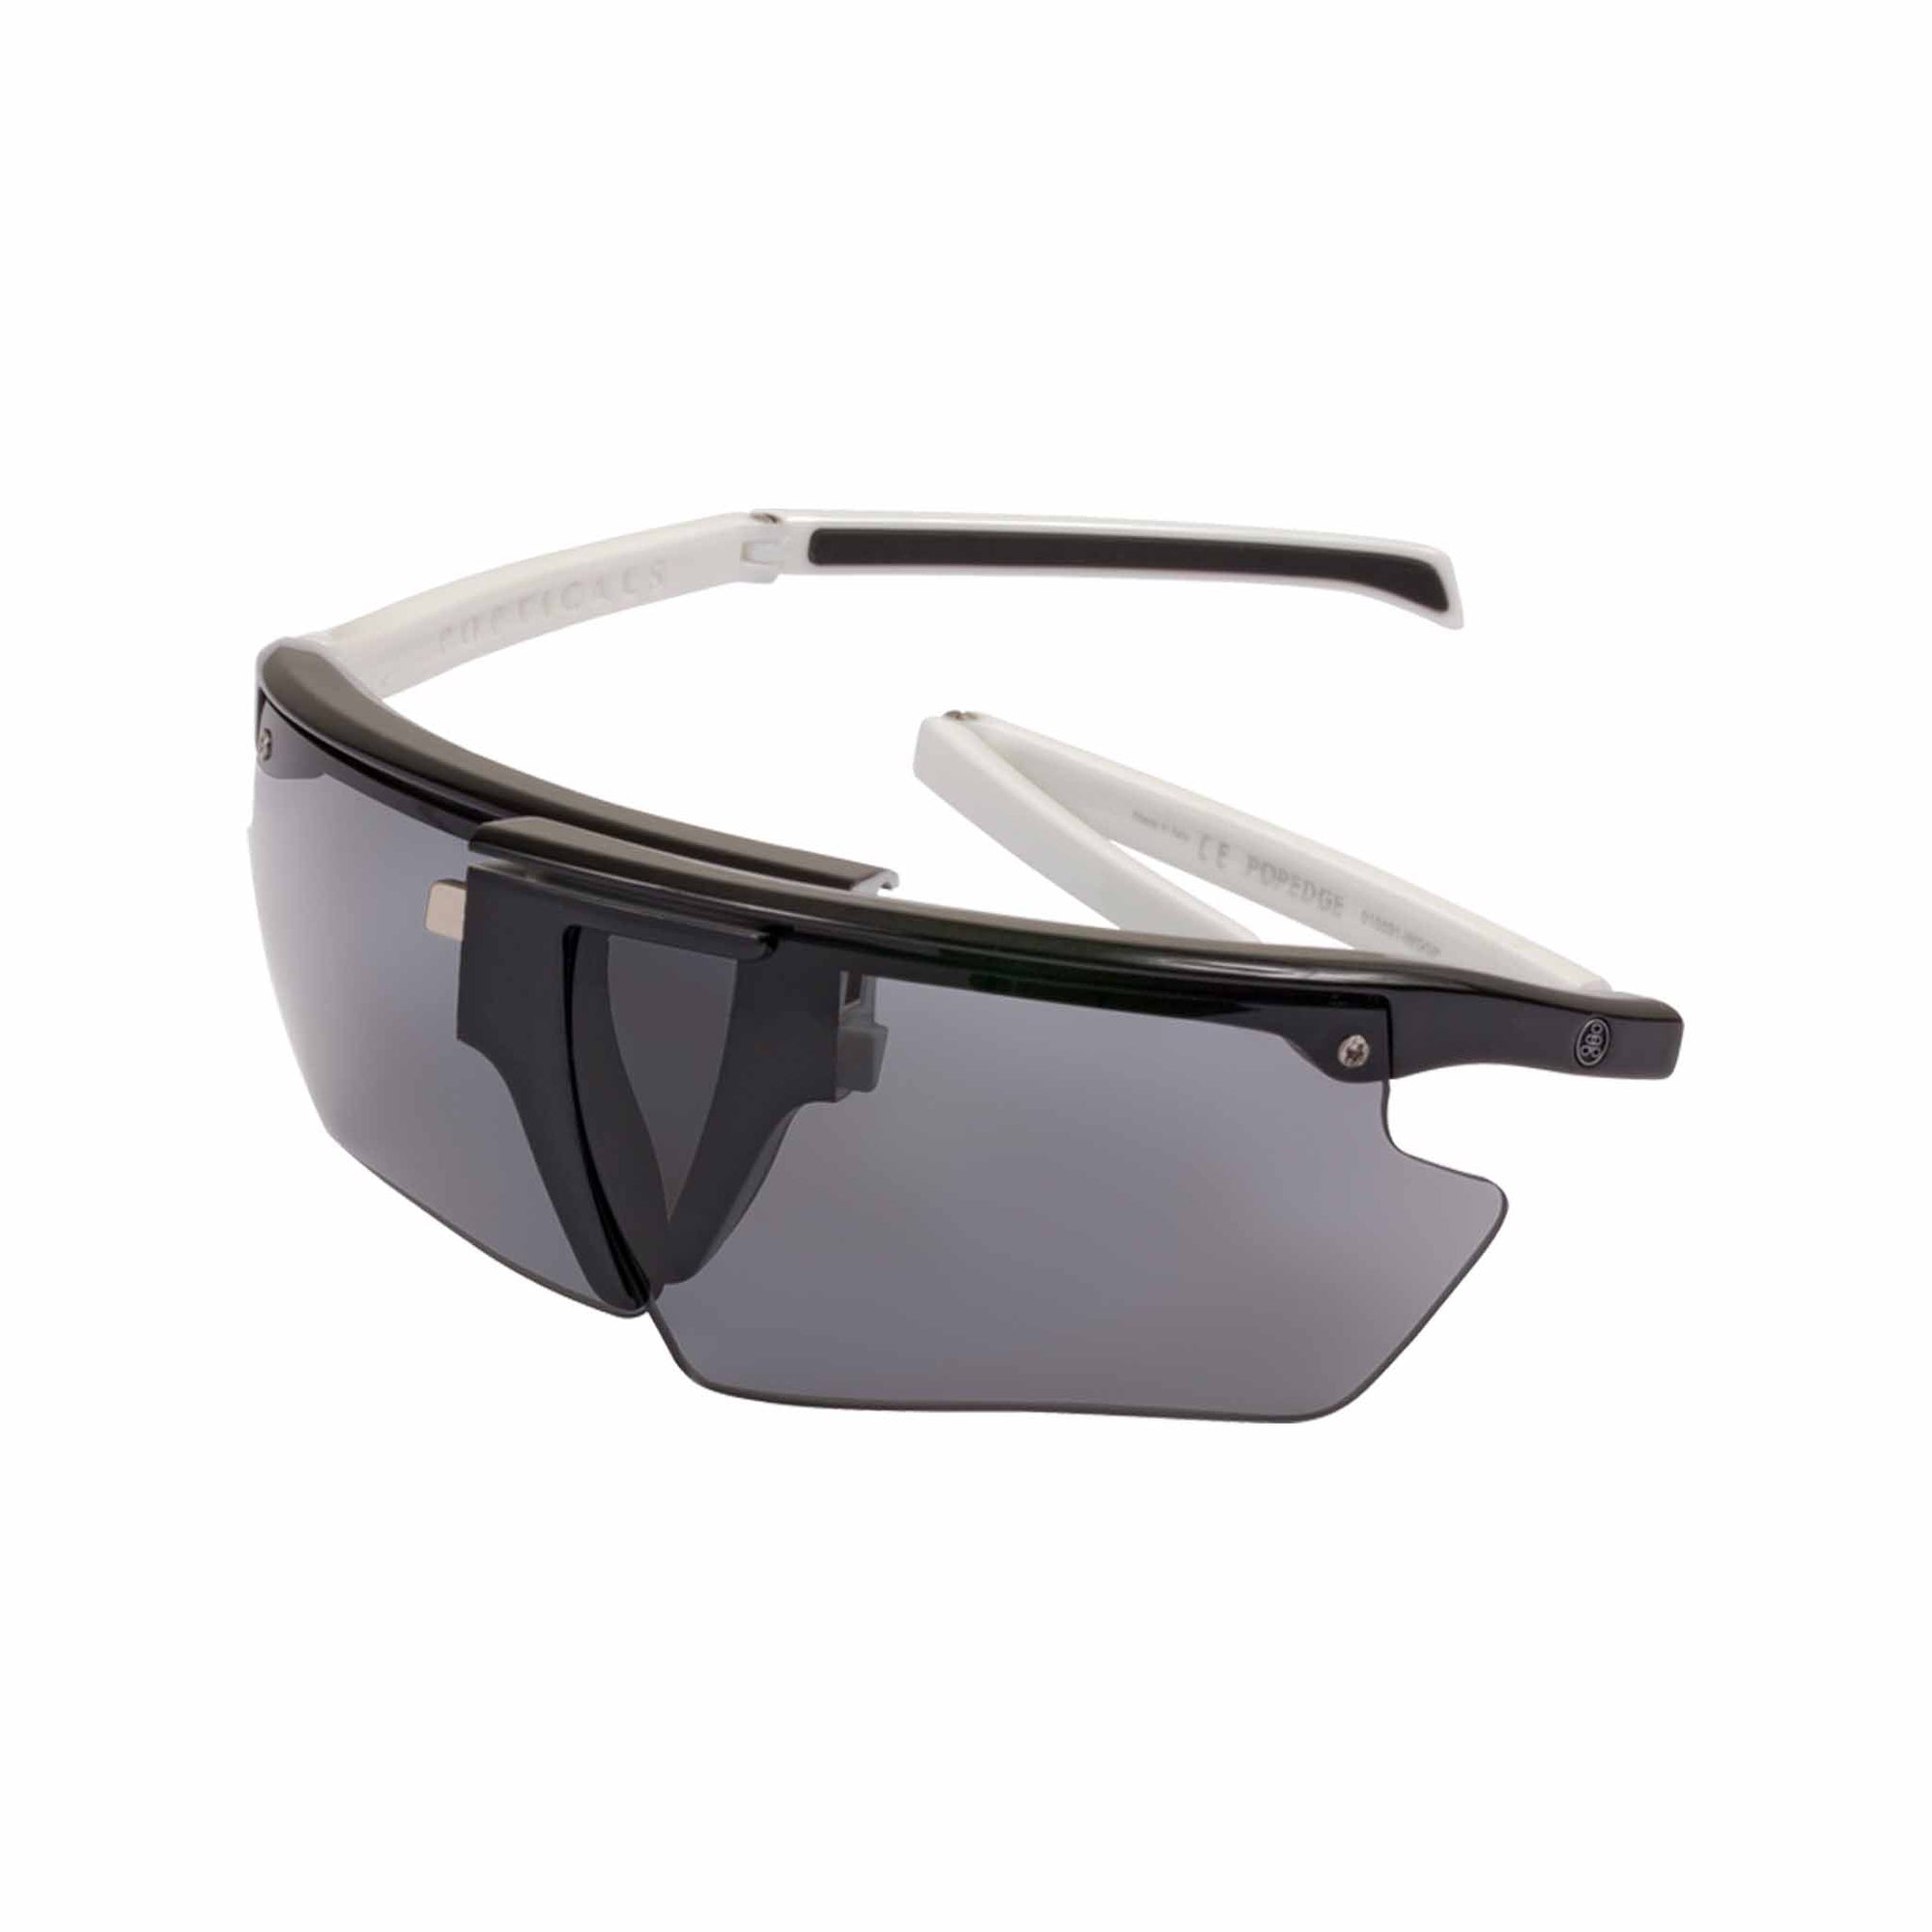 Popticals, Premium Compact Sunglasses, PopEdge, 010091-WGGP, Polarized Sunglasses, Gloss Black and White Frame, Gray Lenses, Spider View